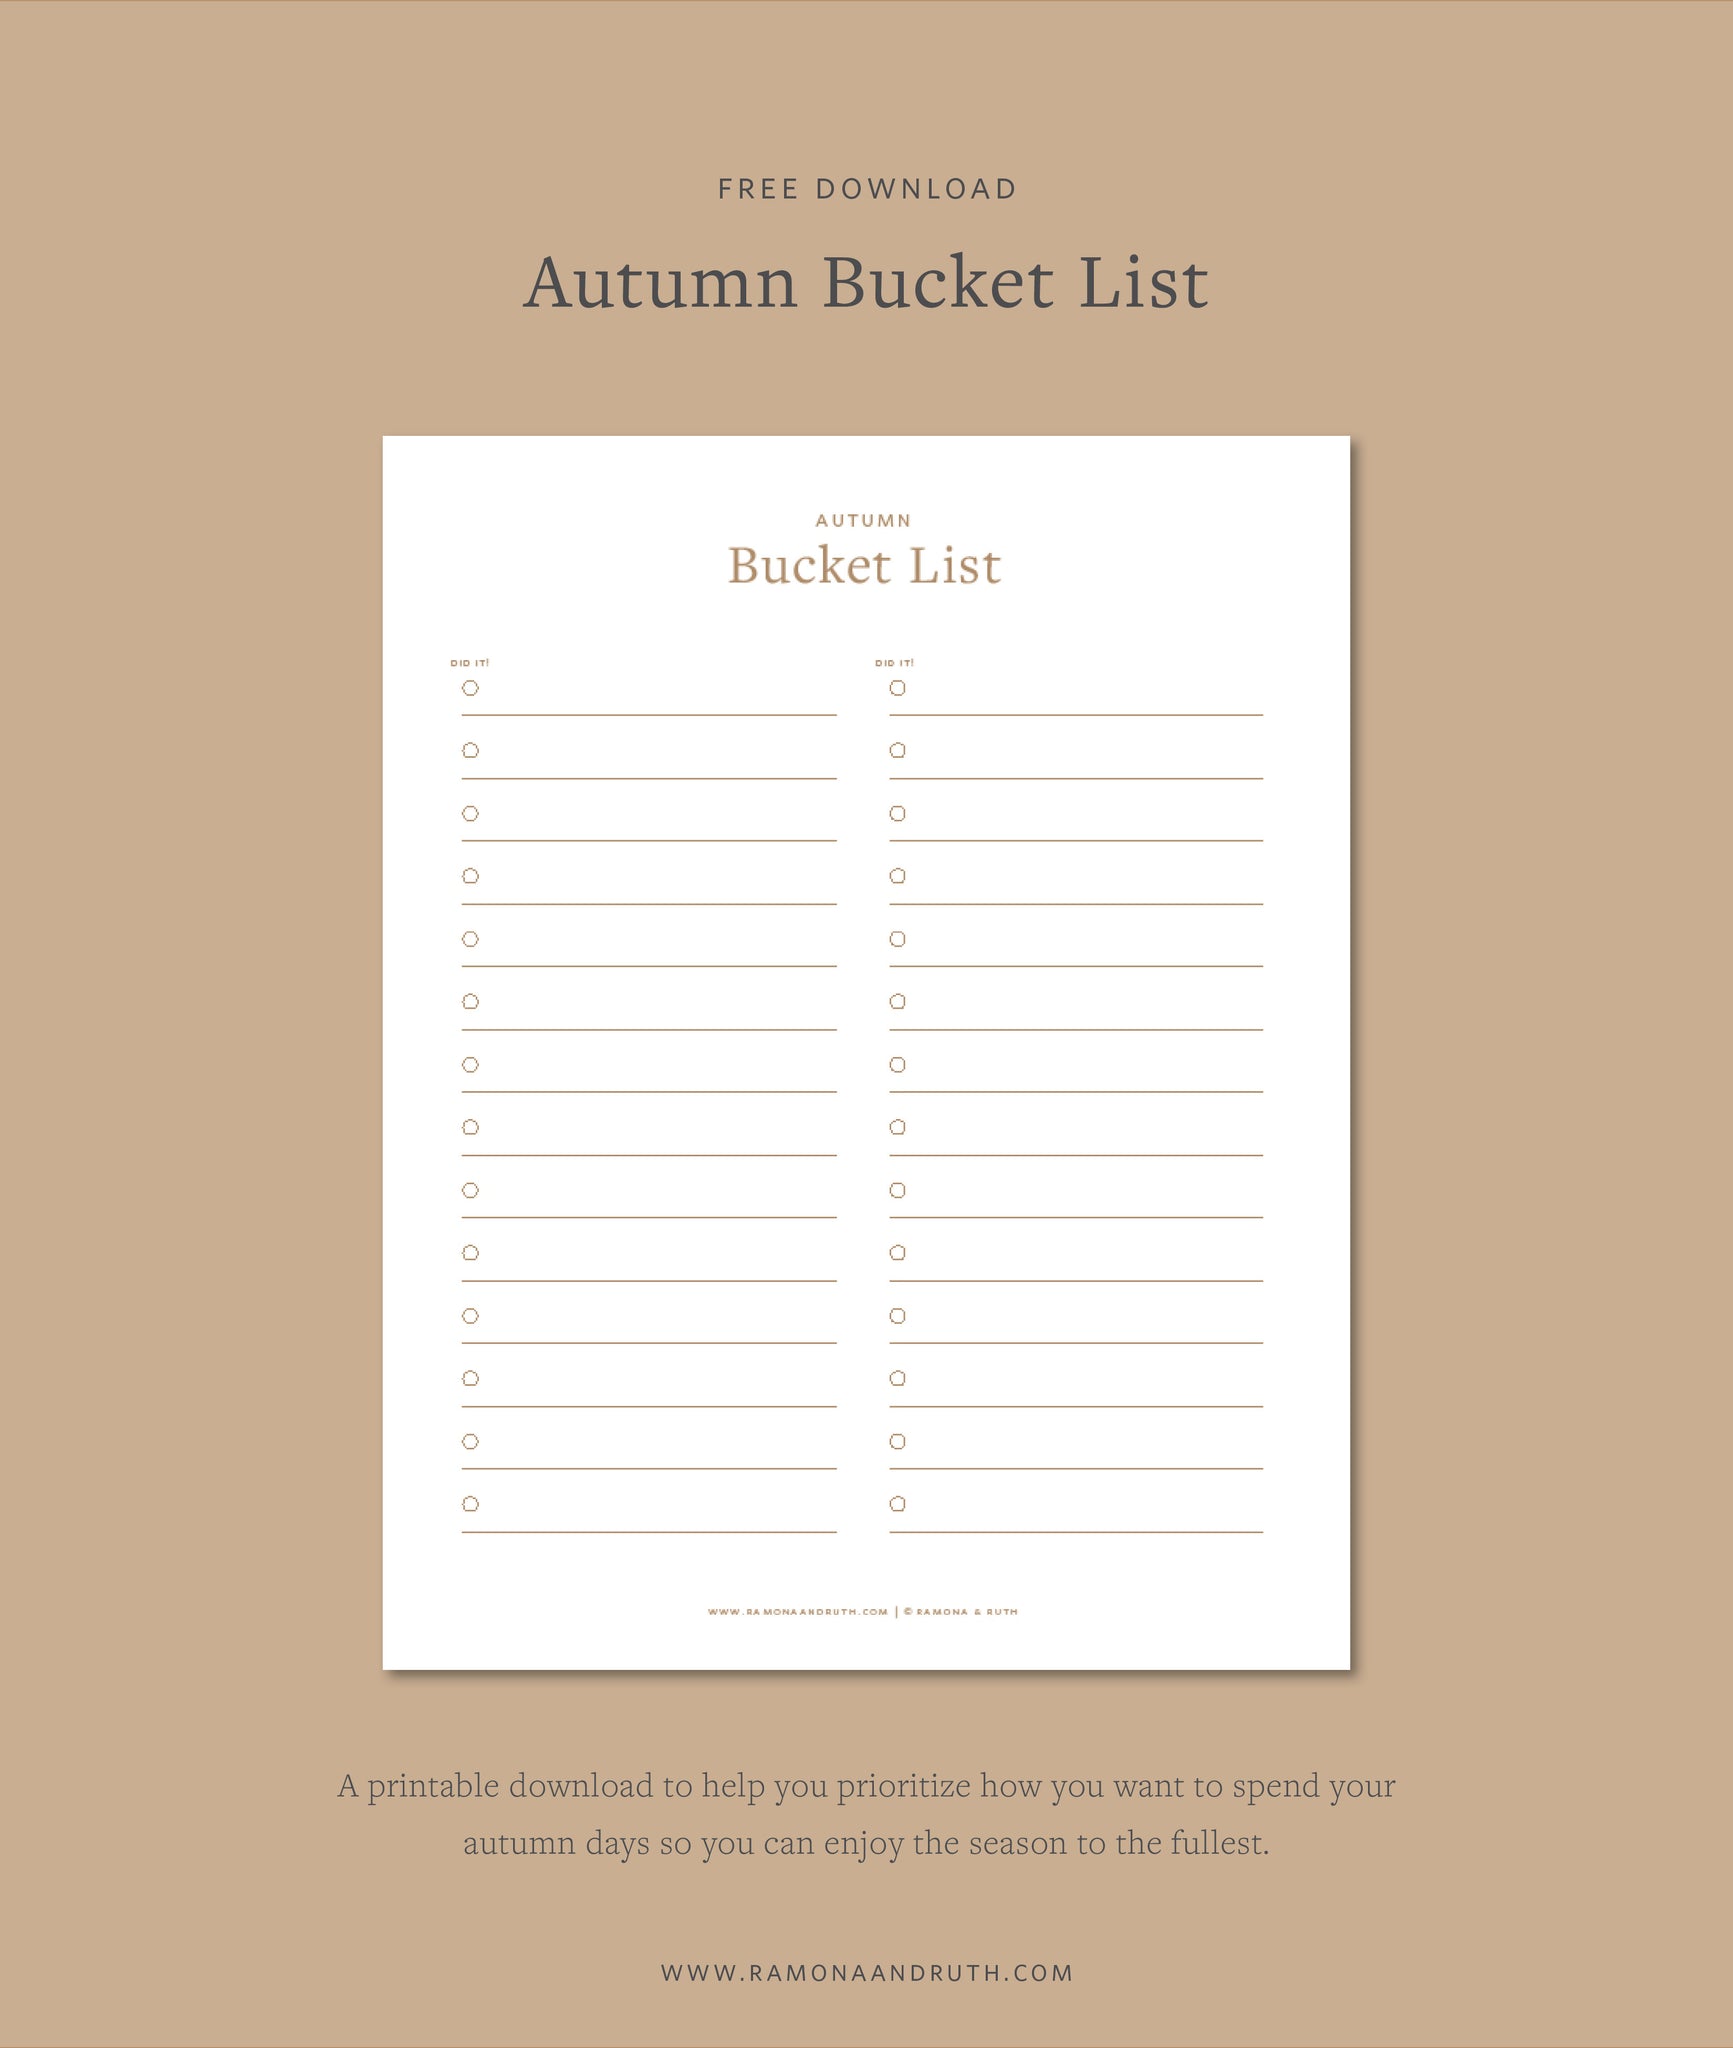 Autumn Bucket List Free Printable Download by Ramona & Ruth